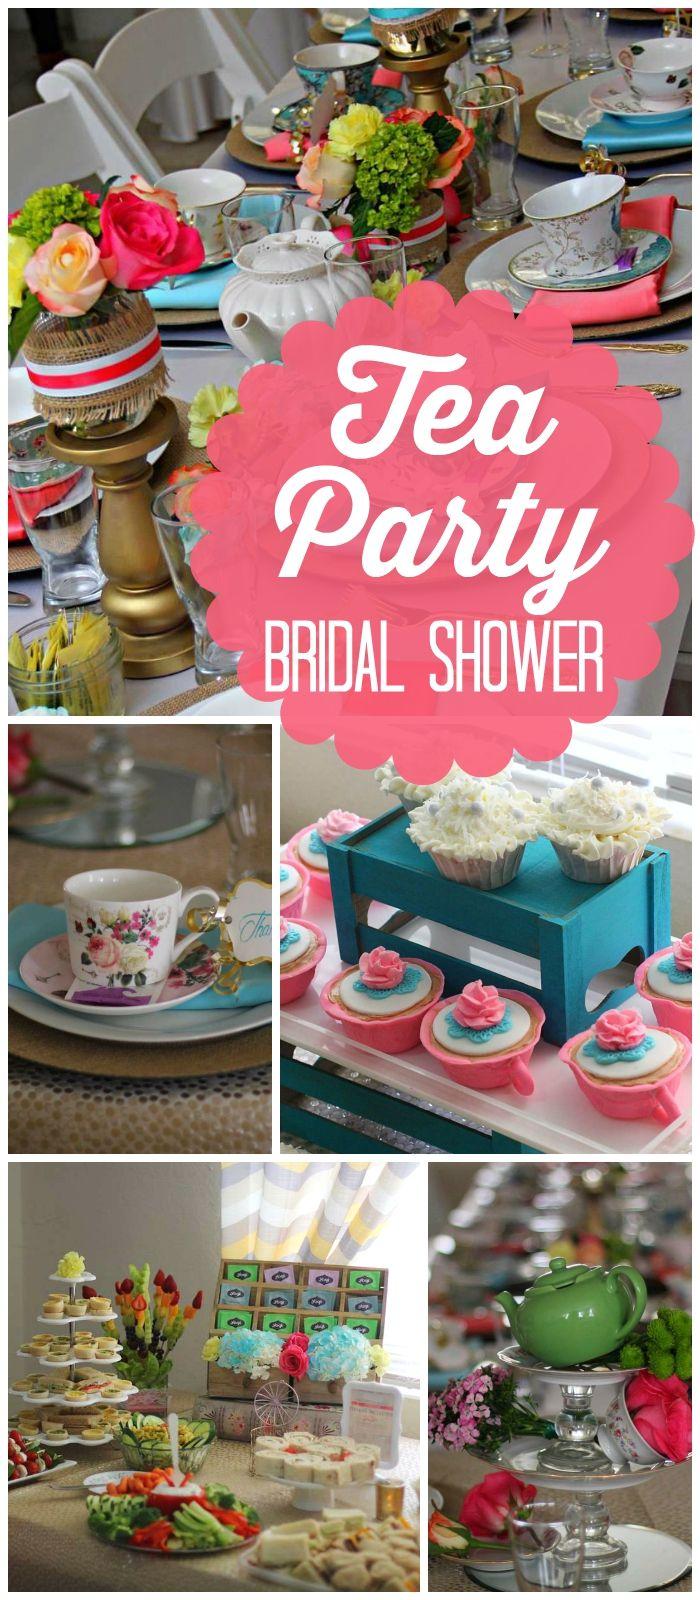 زفاف - Tea Party / Bridal/Wedding Shower "A Bridal Tea"